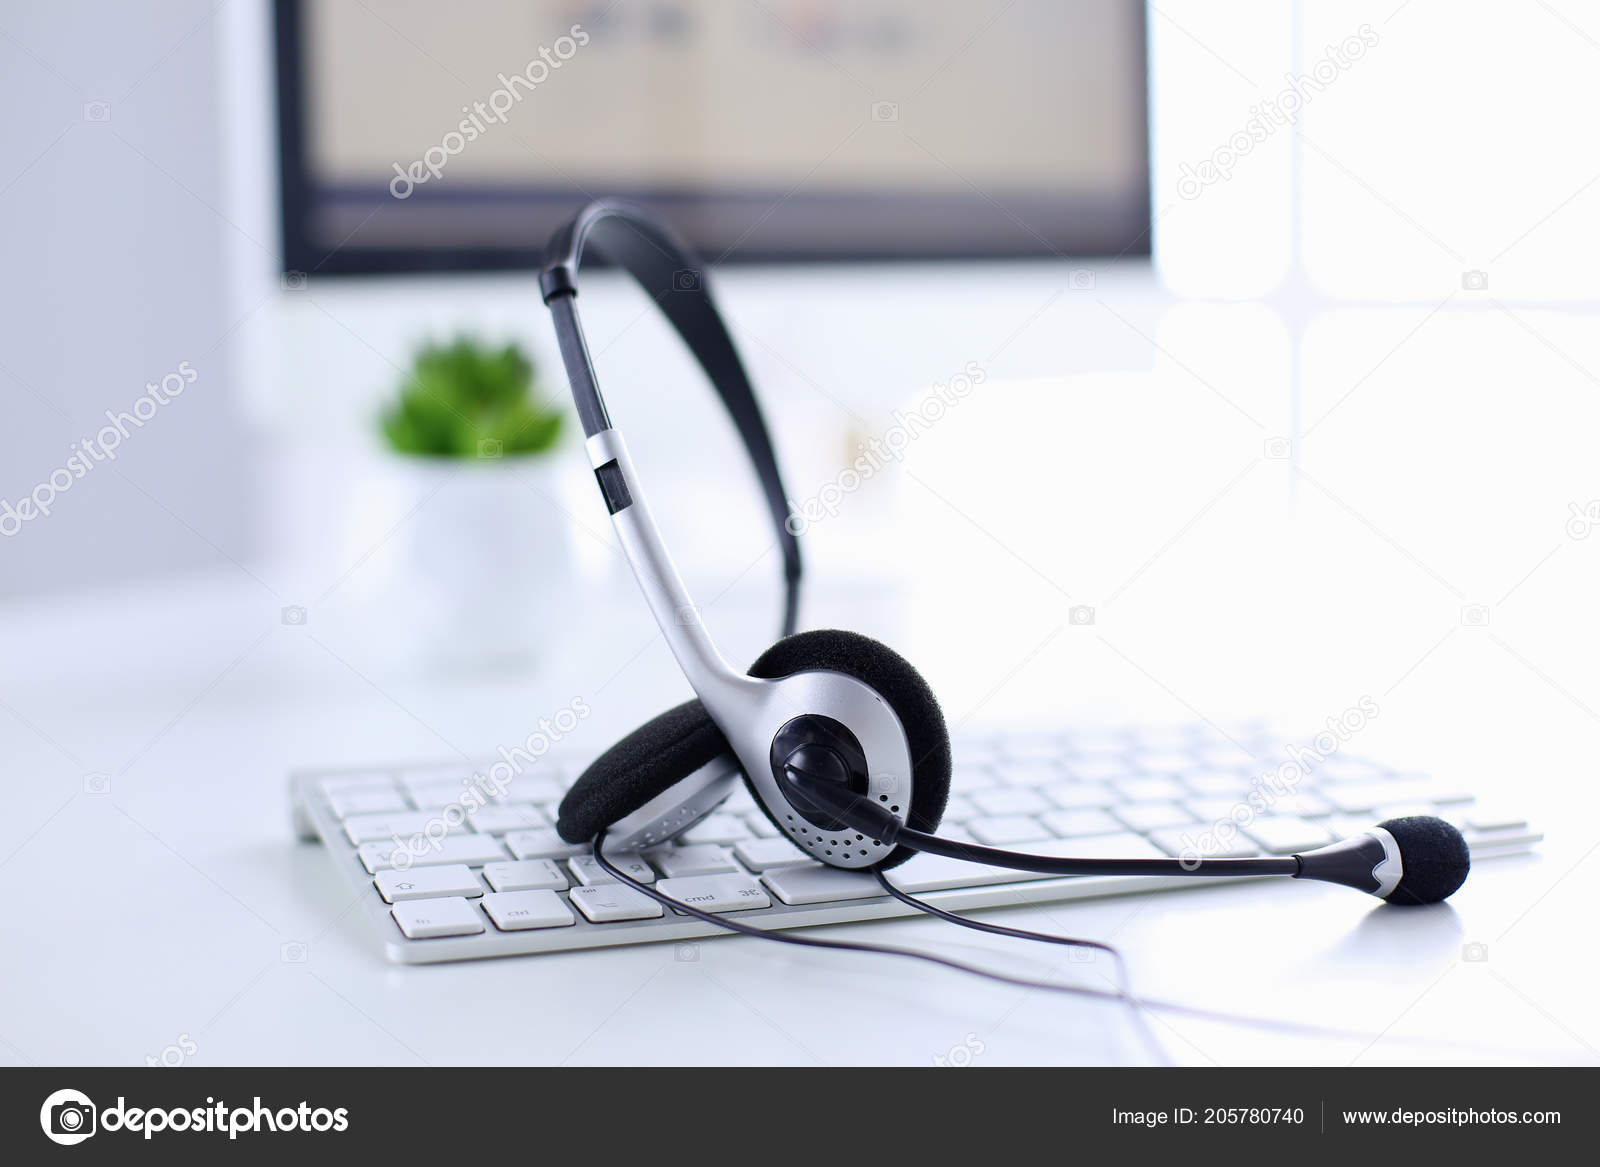 Of anders uitzending Zullen Call center and customer service help desk. VOIP headset on laptop computer  keyboard Stock Photo by ©lenecnikolai 205780740